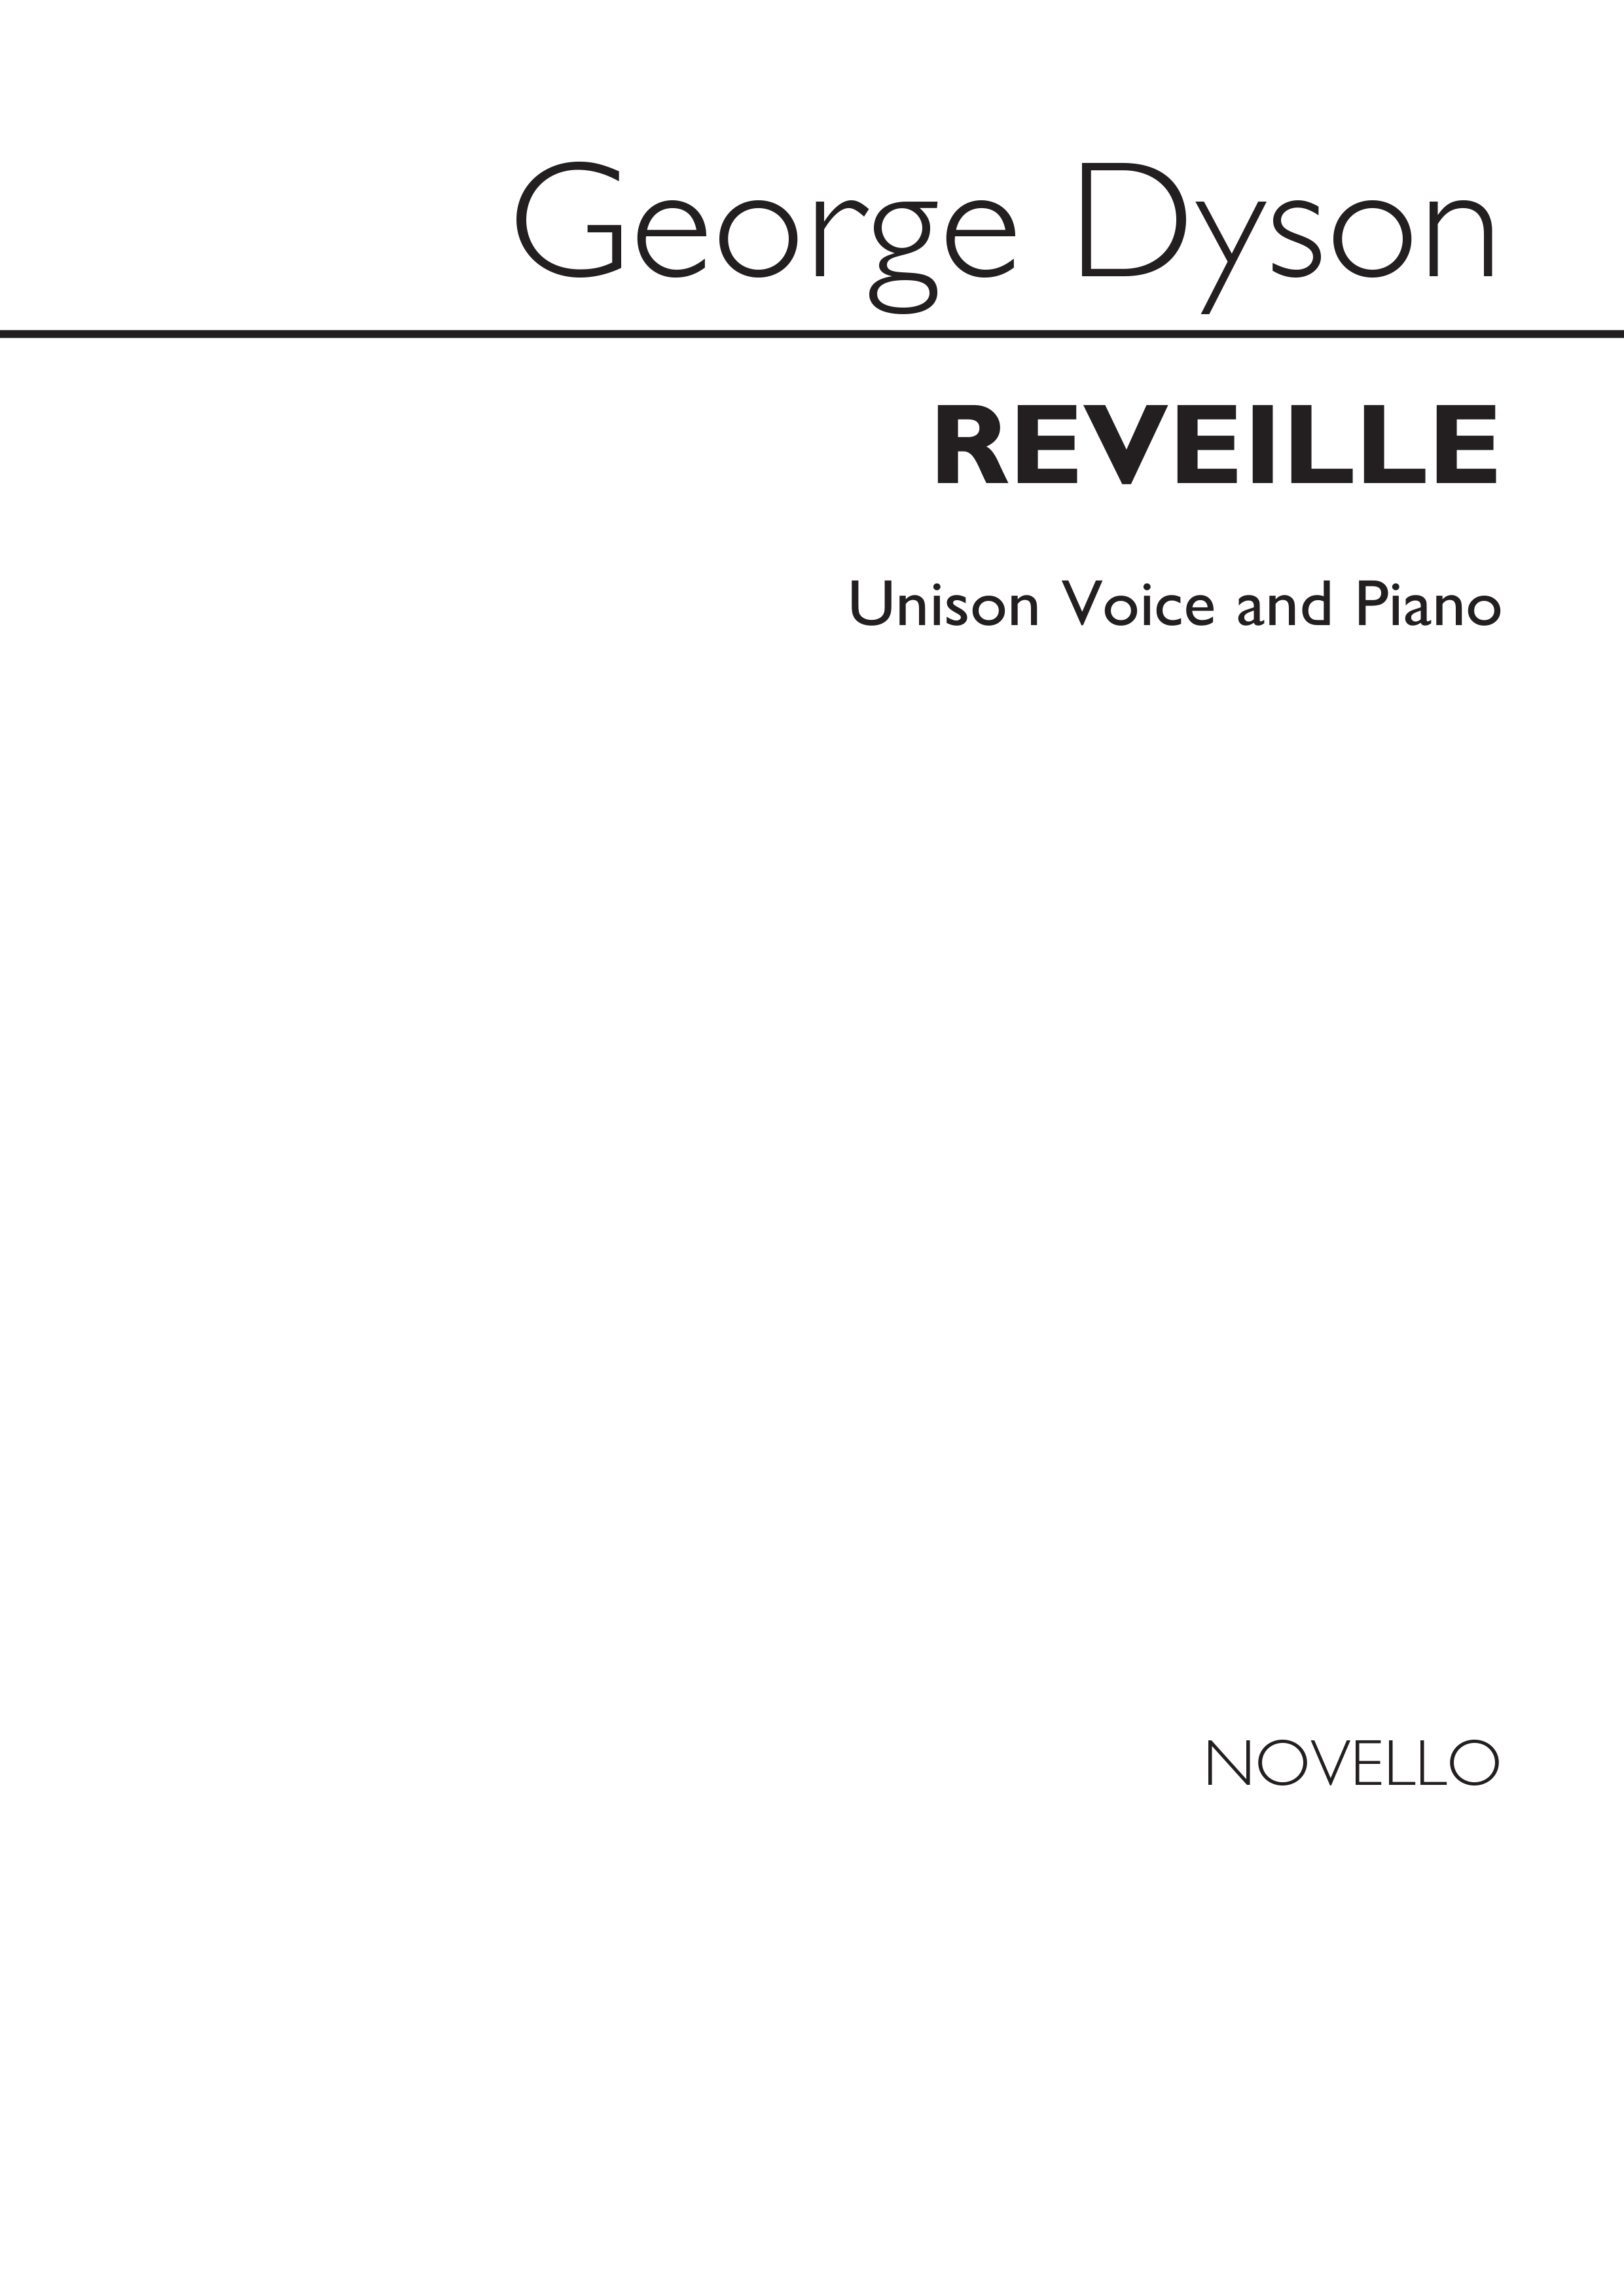 George Dyson: Reveille